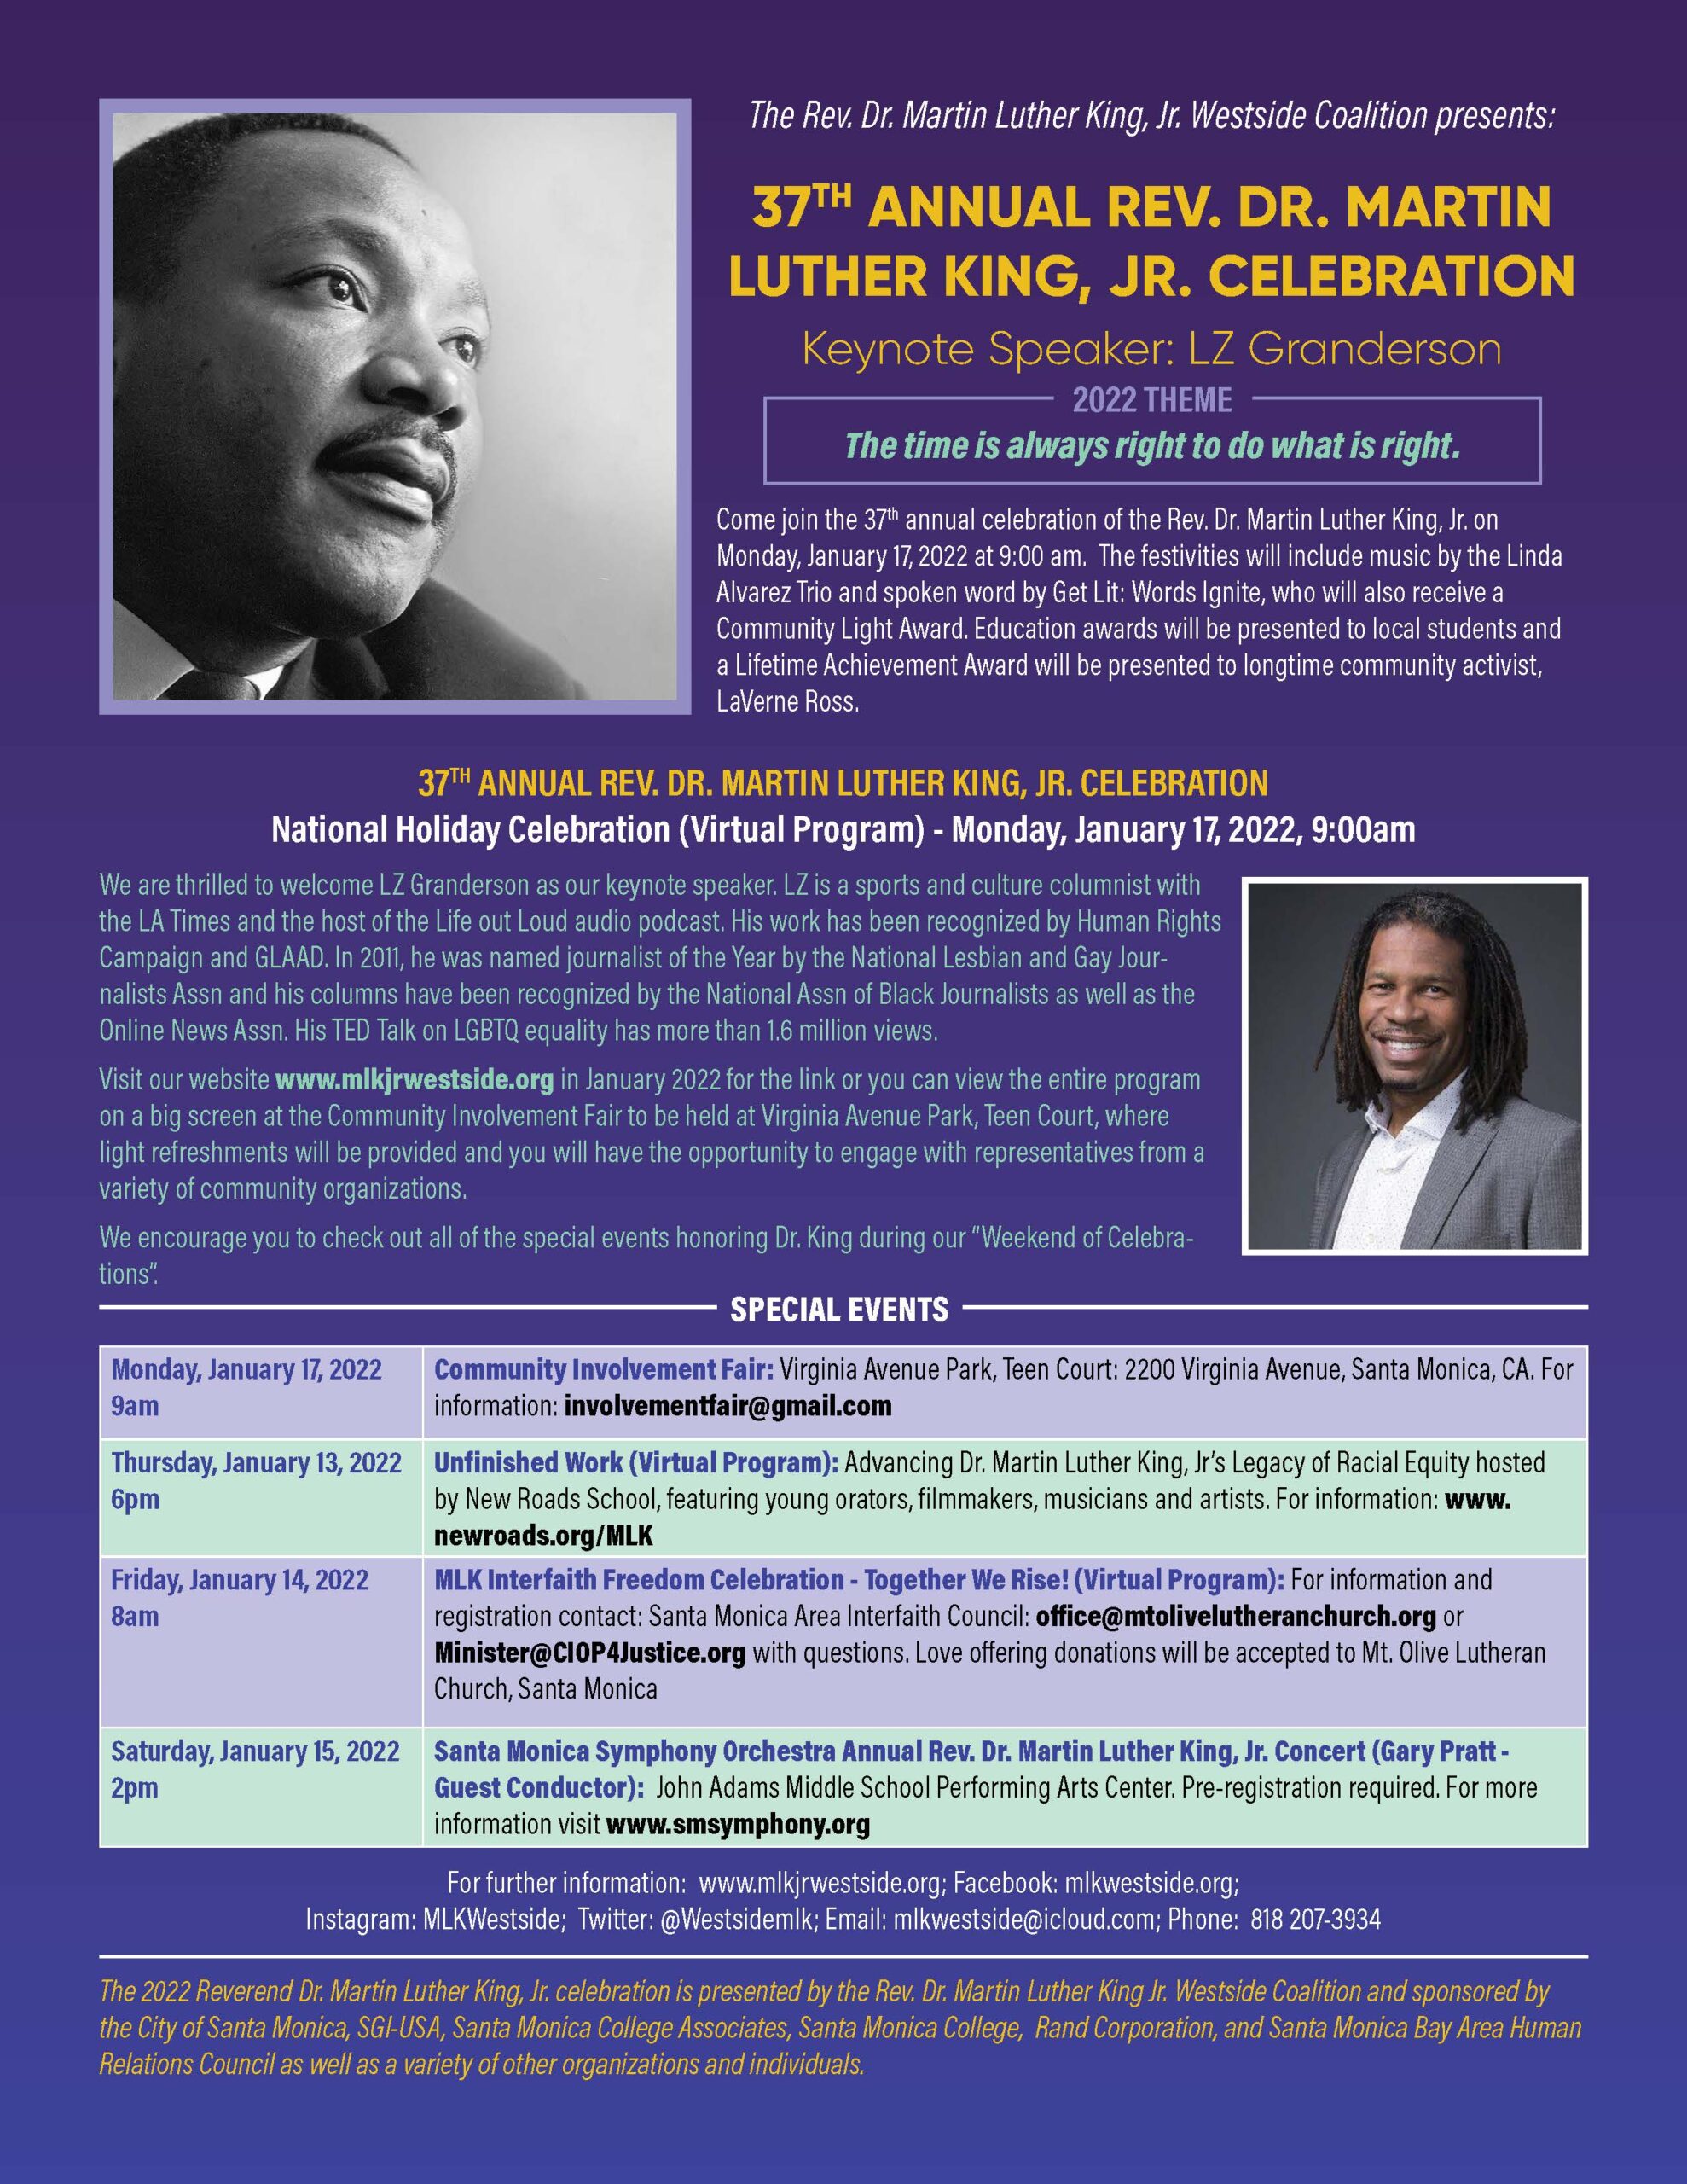 37th Annual Rev. Dr. Martin Luther King, Jr. Celebration Visit Santa